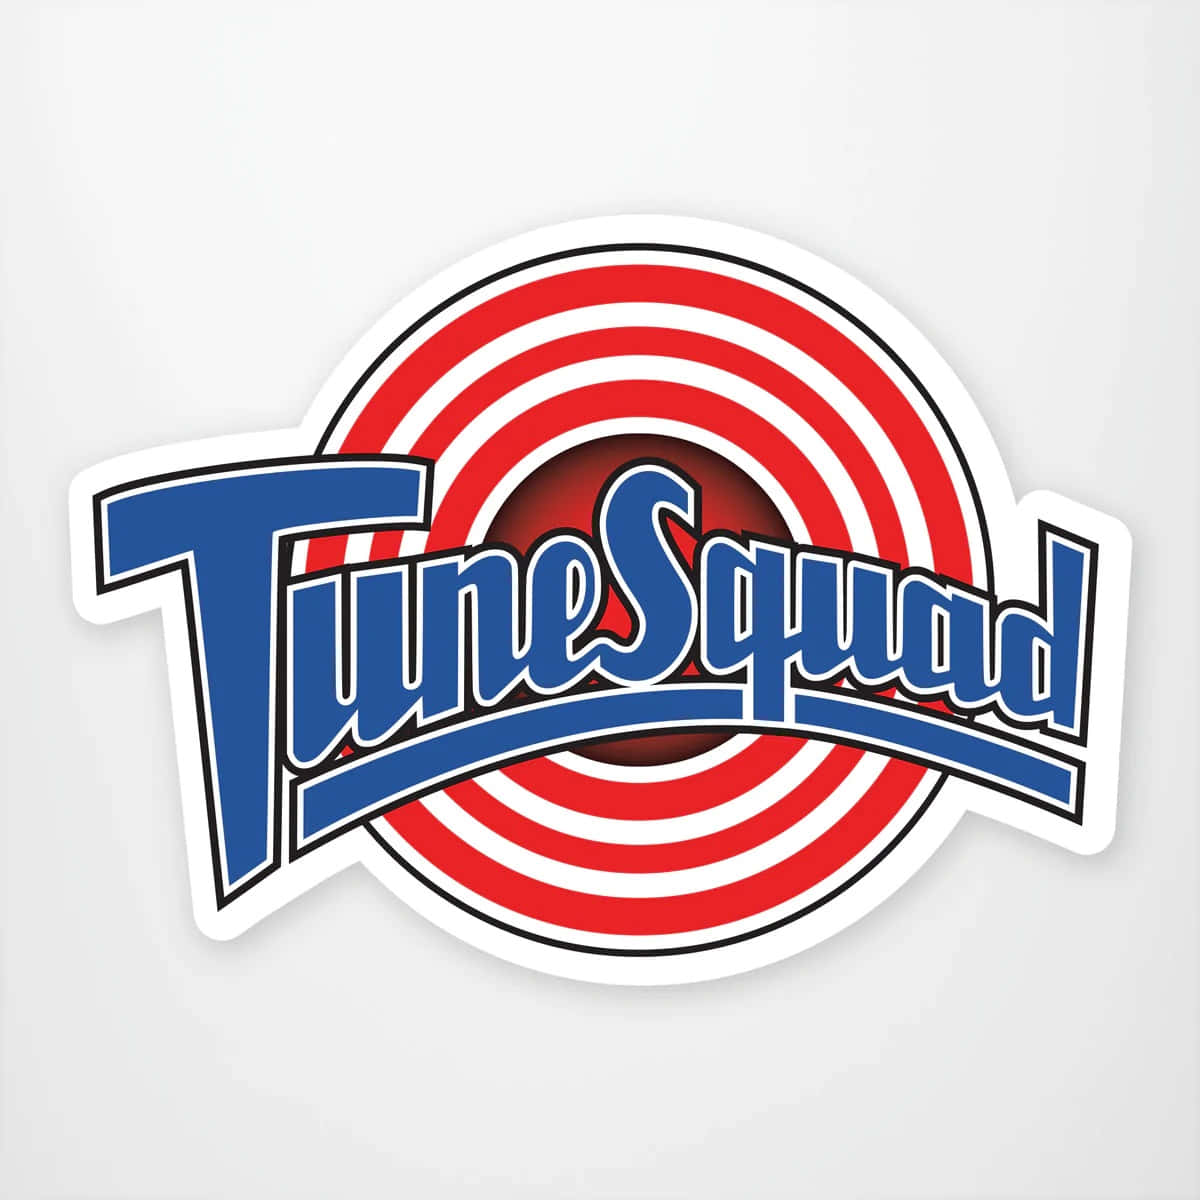 tune squad logo on a white background Wallpaper